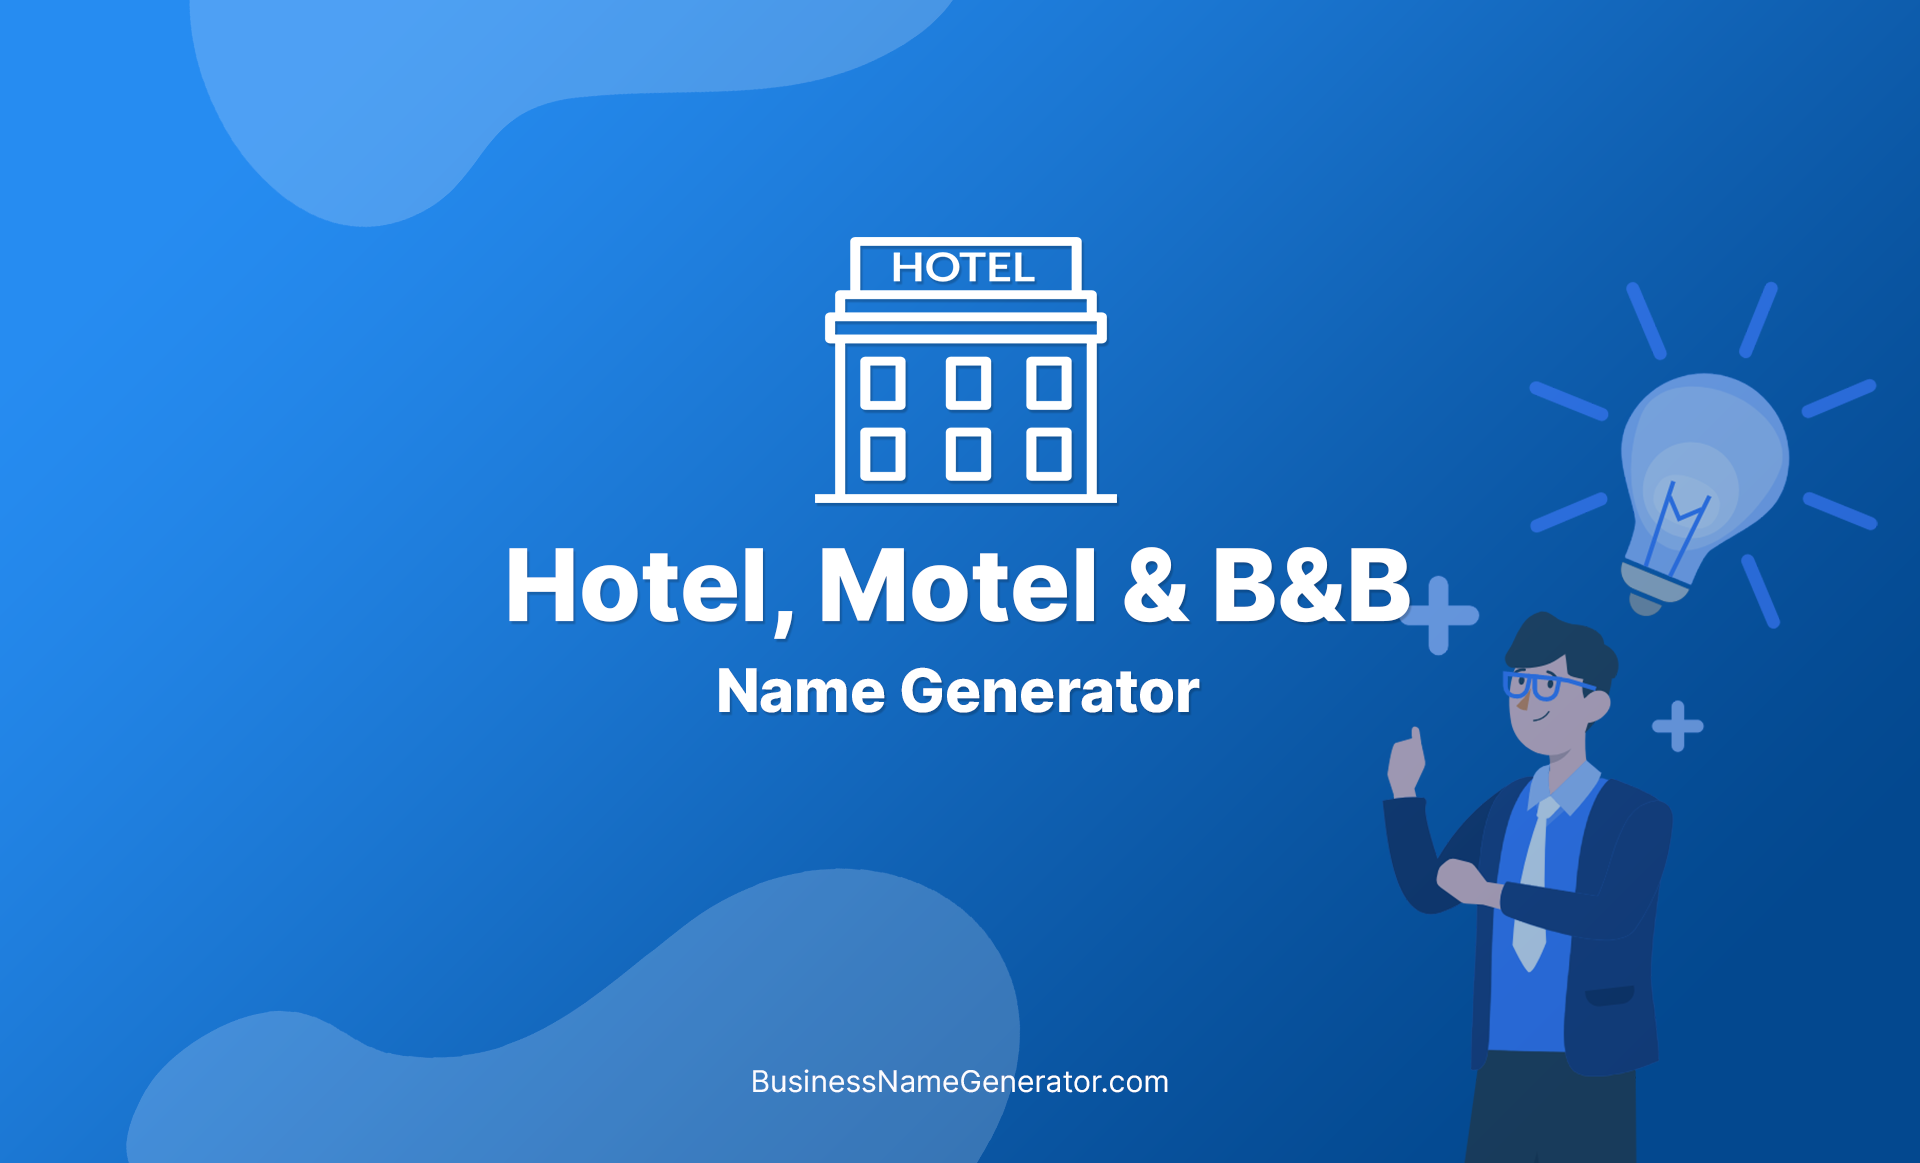 Hotel, Motel & B&B Name Generator